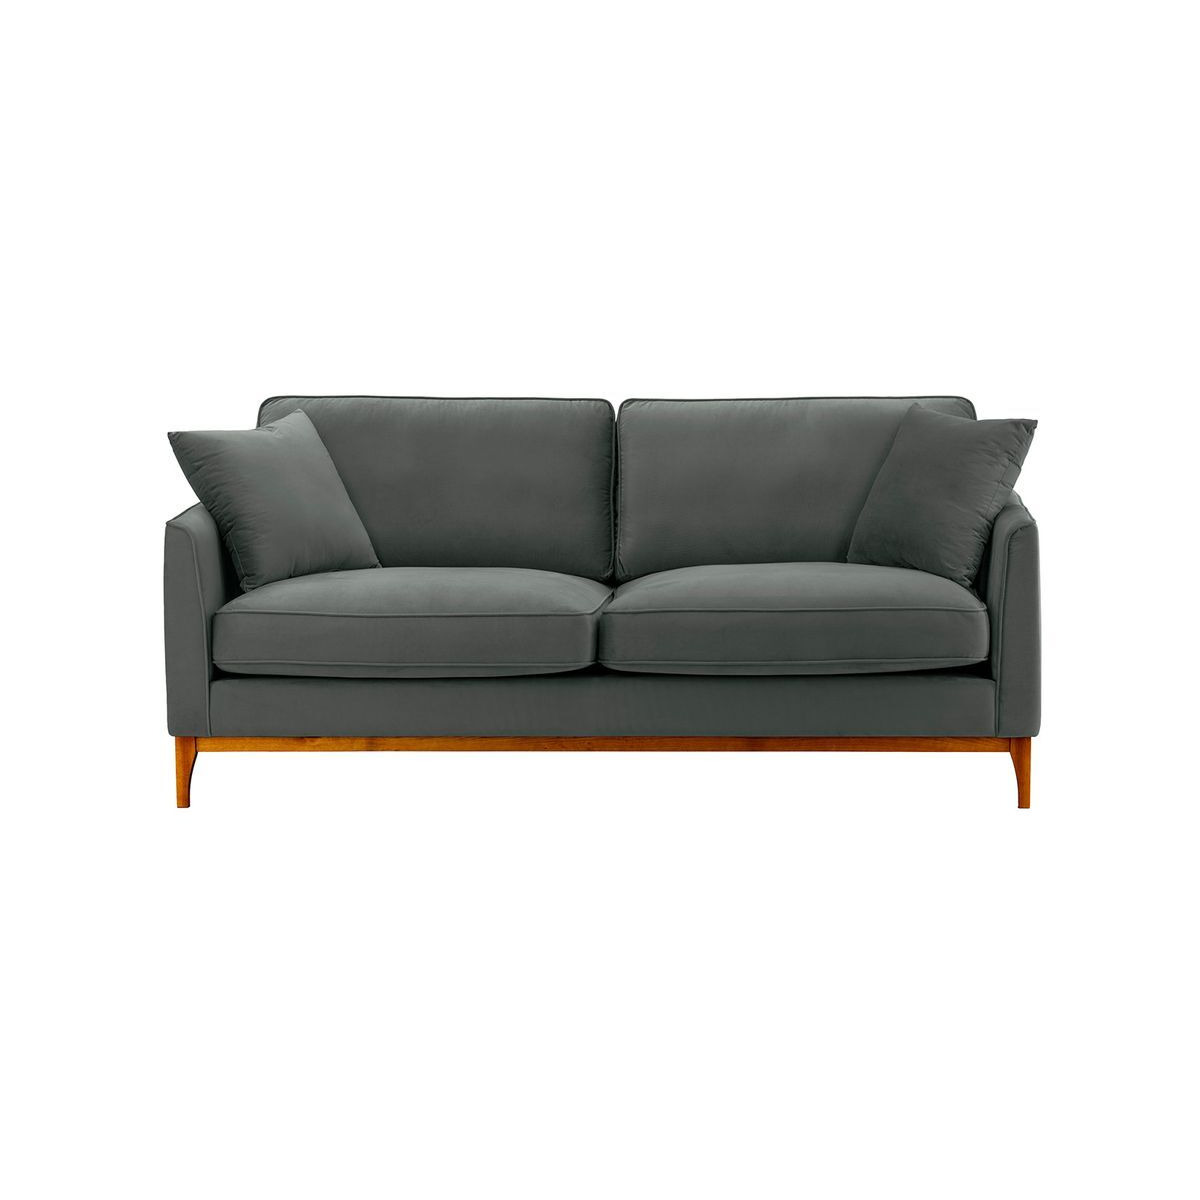 Linara 3 Seater Sofa, graphite, Leg colour: aveo - image 1